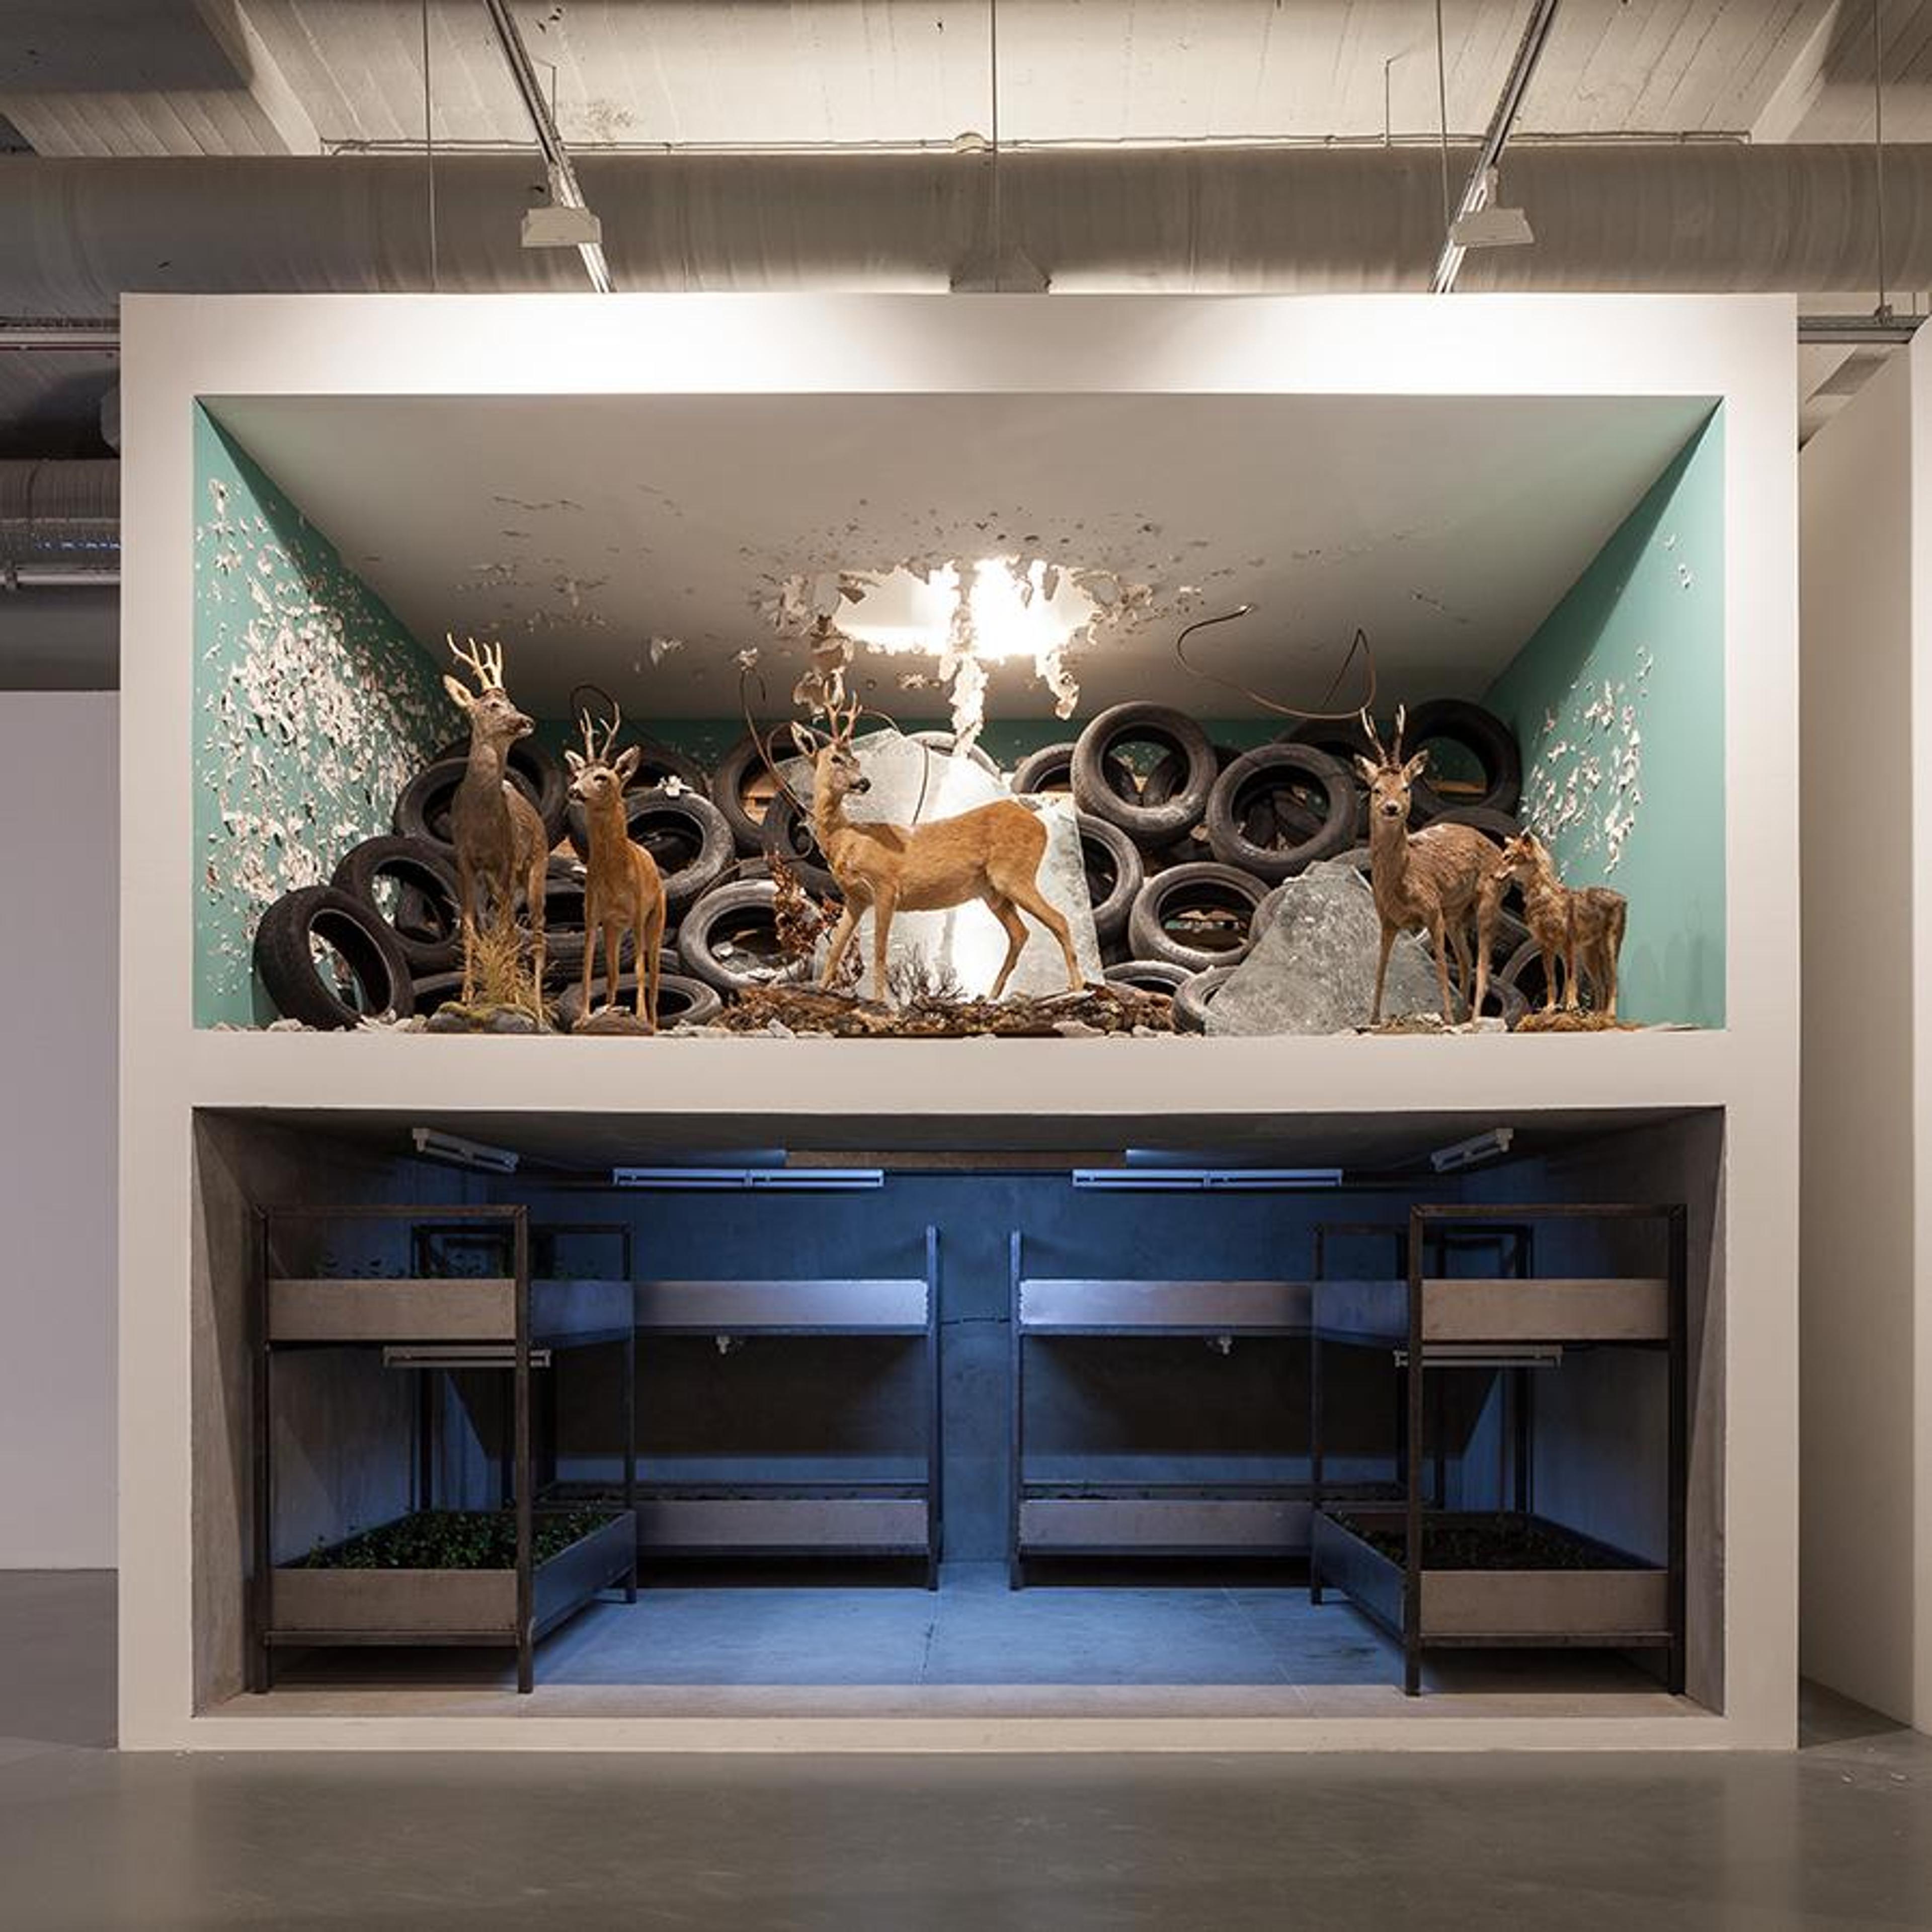 Nikita Kadan, The Shelter , 2015, metal, wood, taxidermy, glass, rubber, paint. &copy; 2015